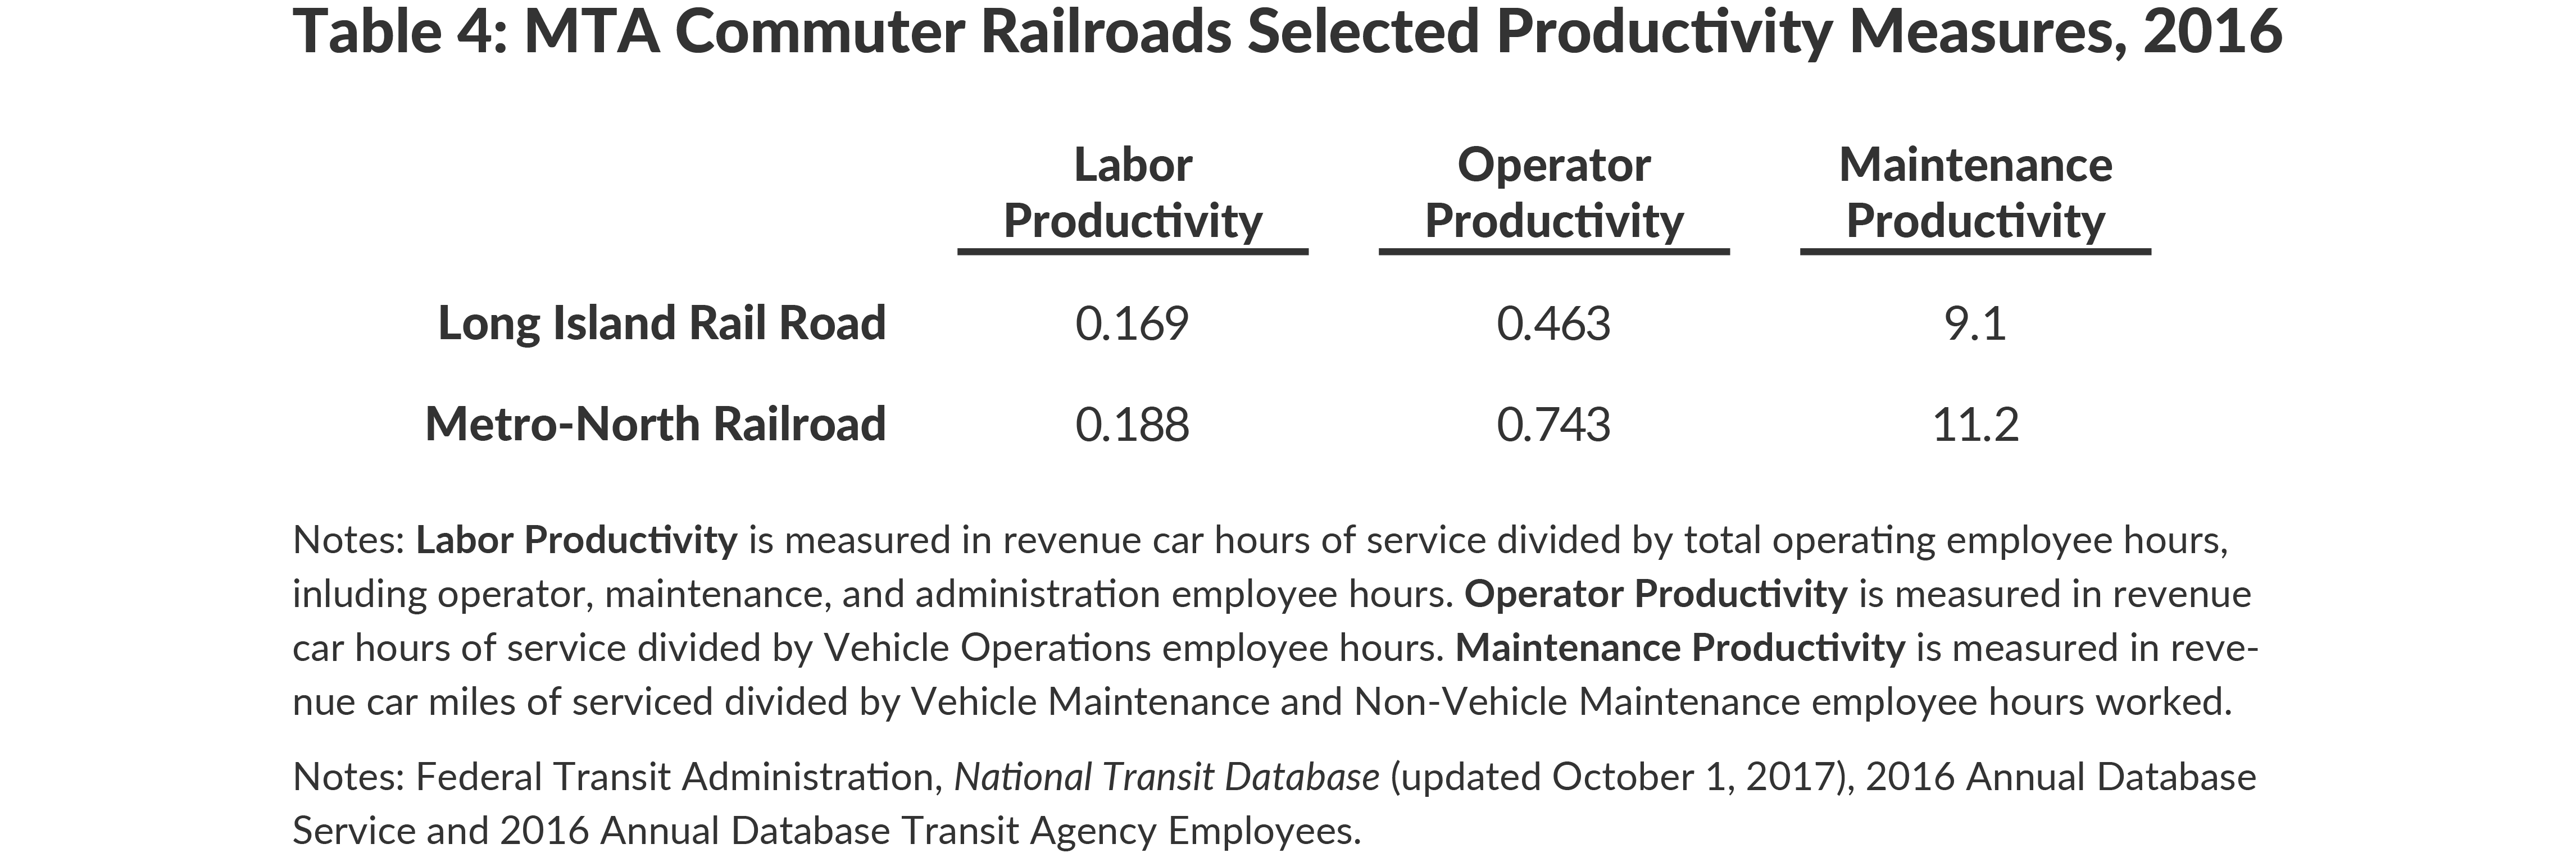 Table 4: MTA Commuter Railroads Selected Productivity Measures, 2016